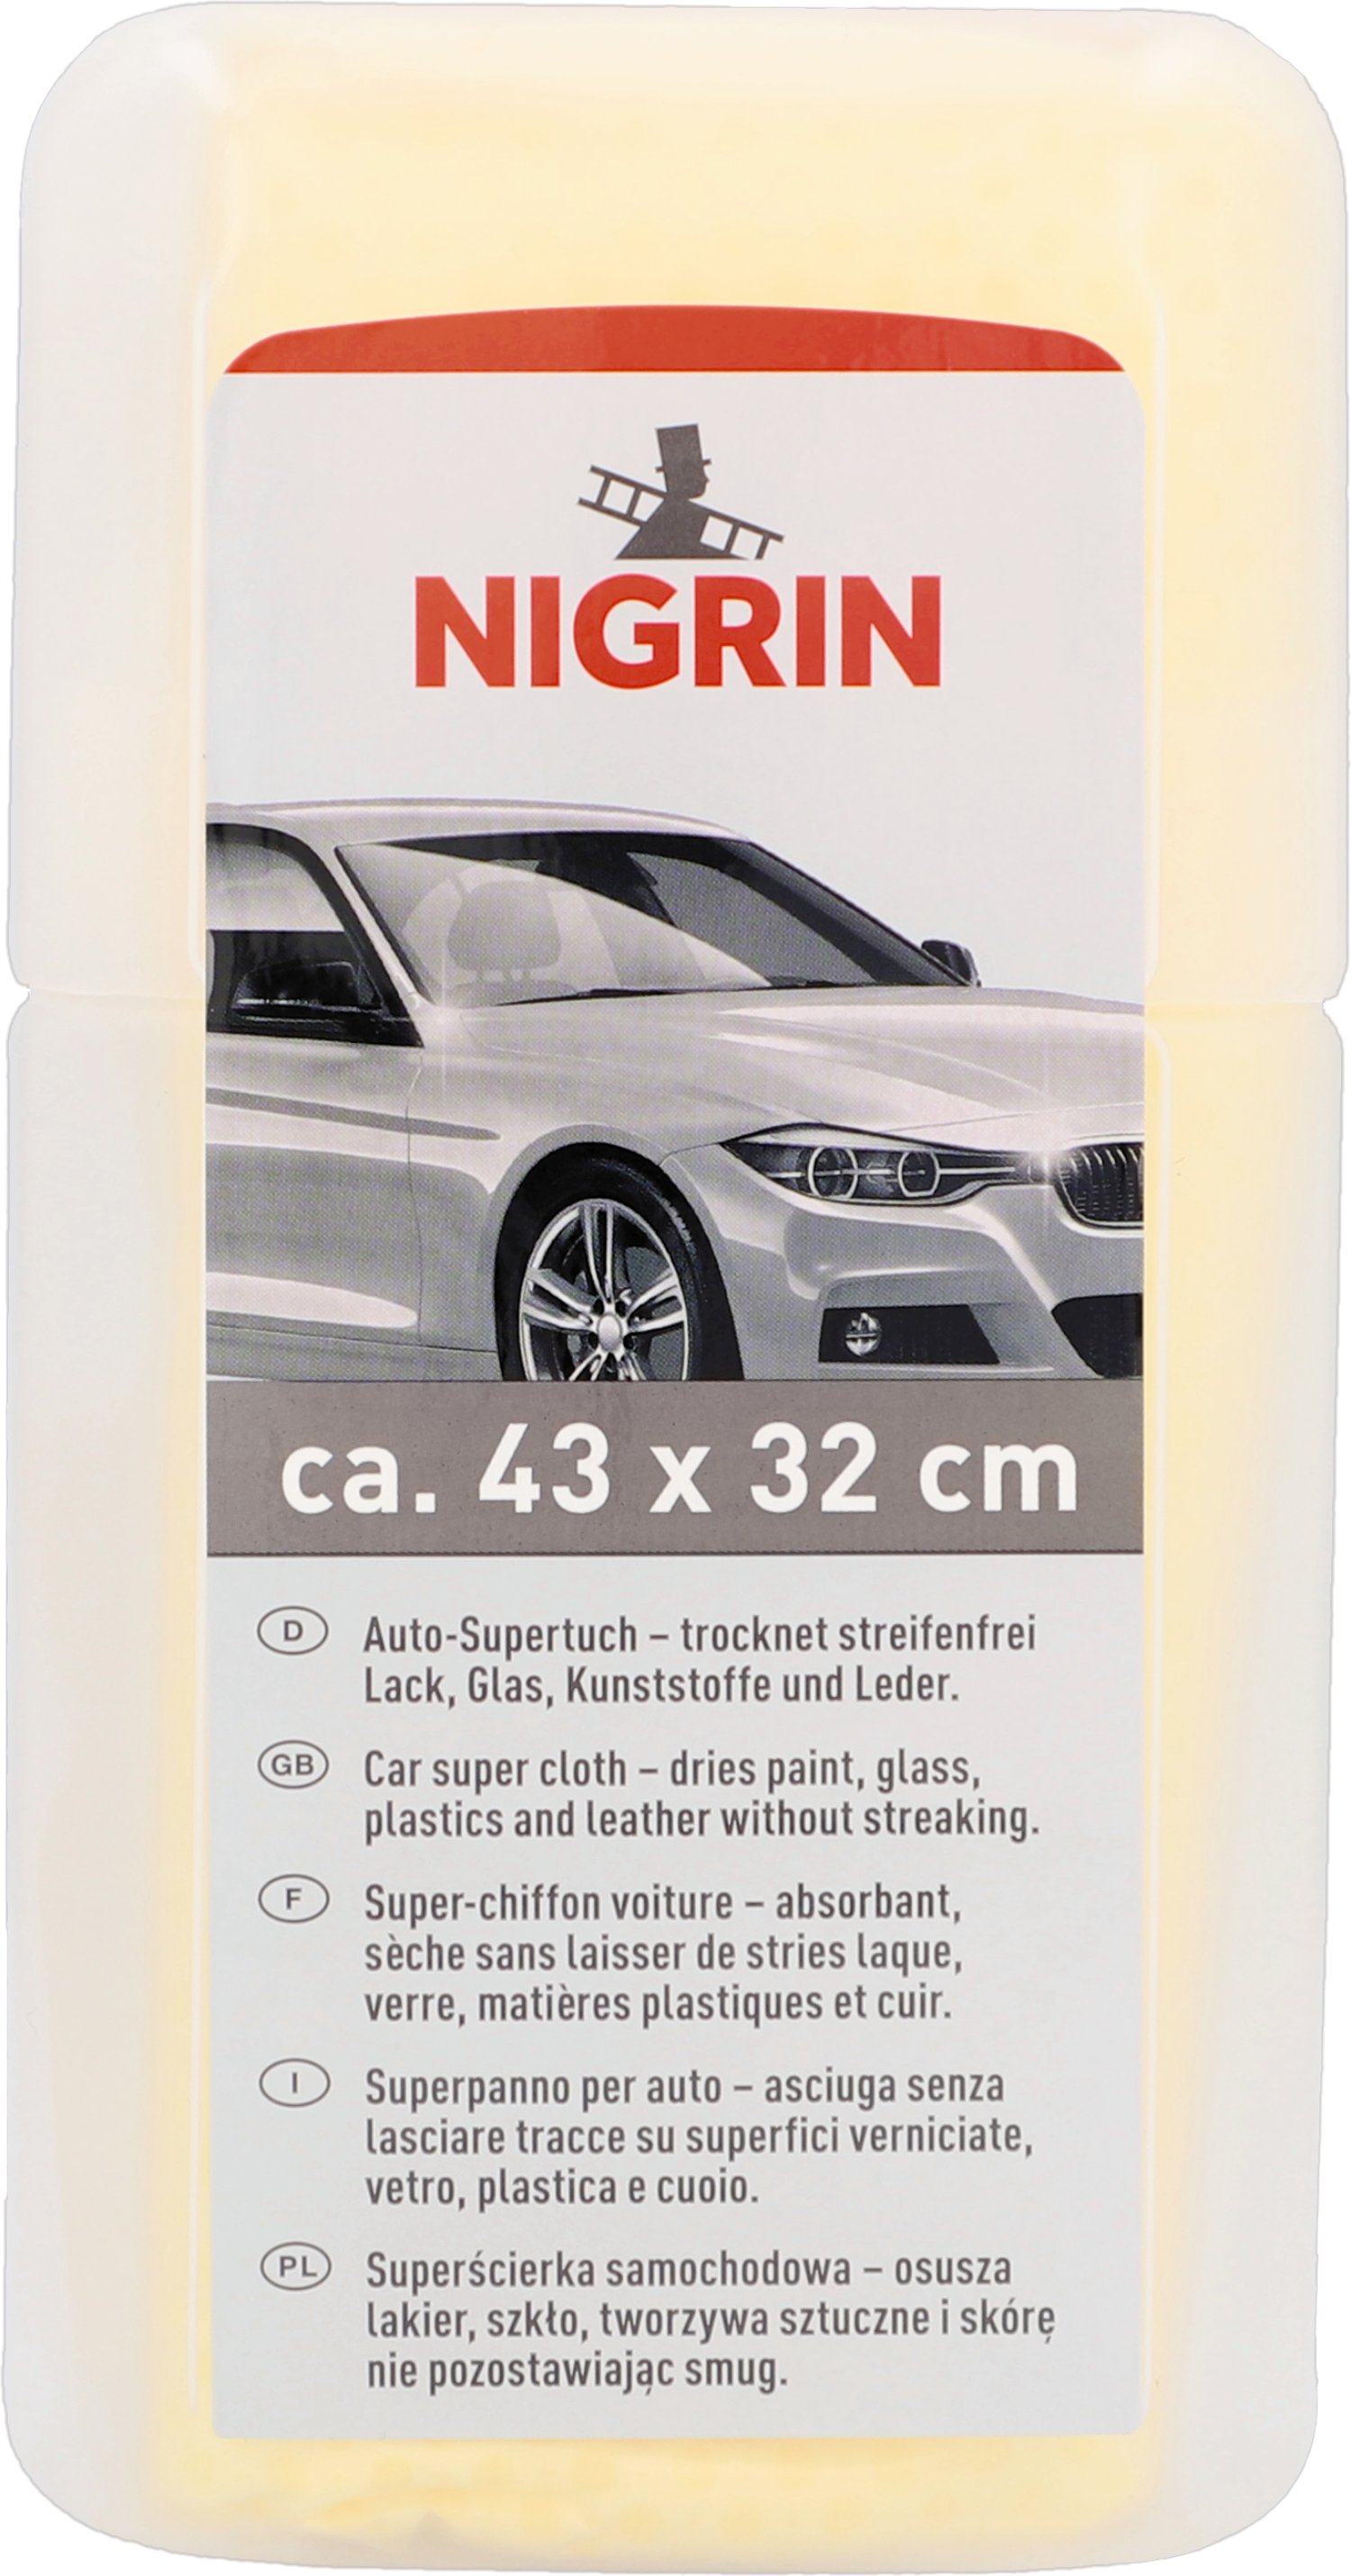 NIGRIN Auto-Supertuch